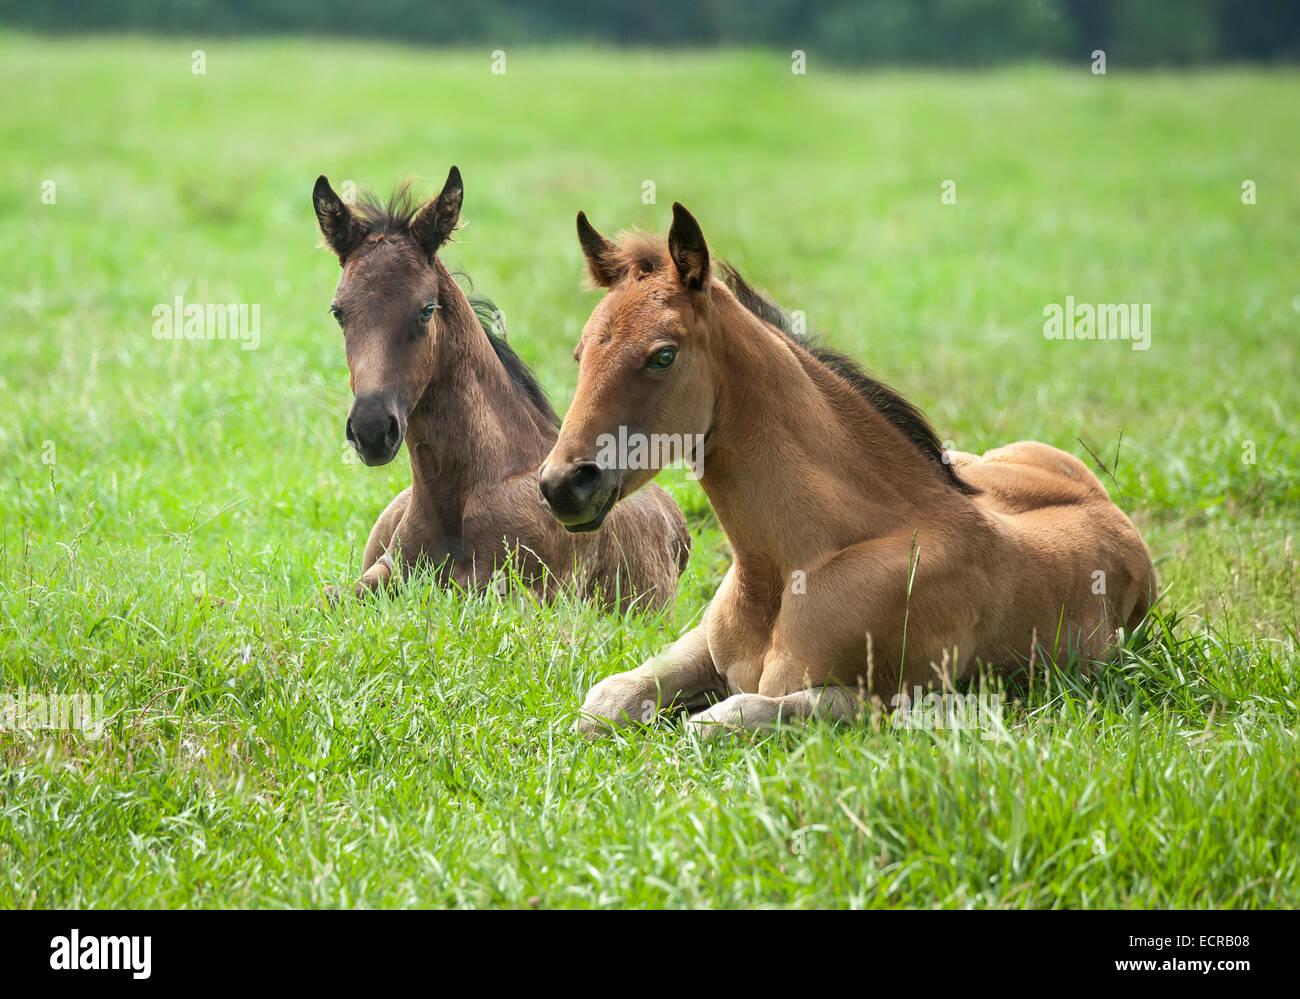 Poulains Quarter Horse lying in grass Banque D'Images